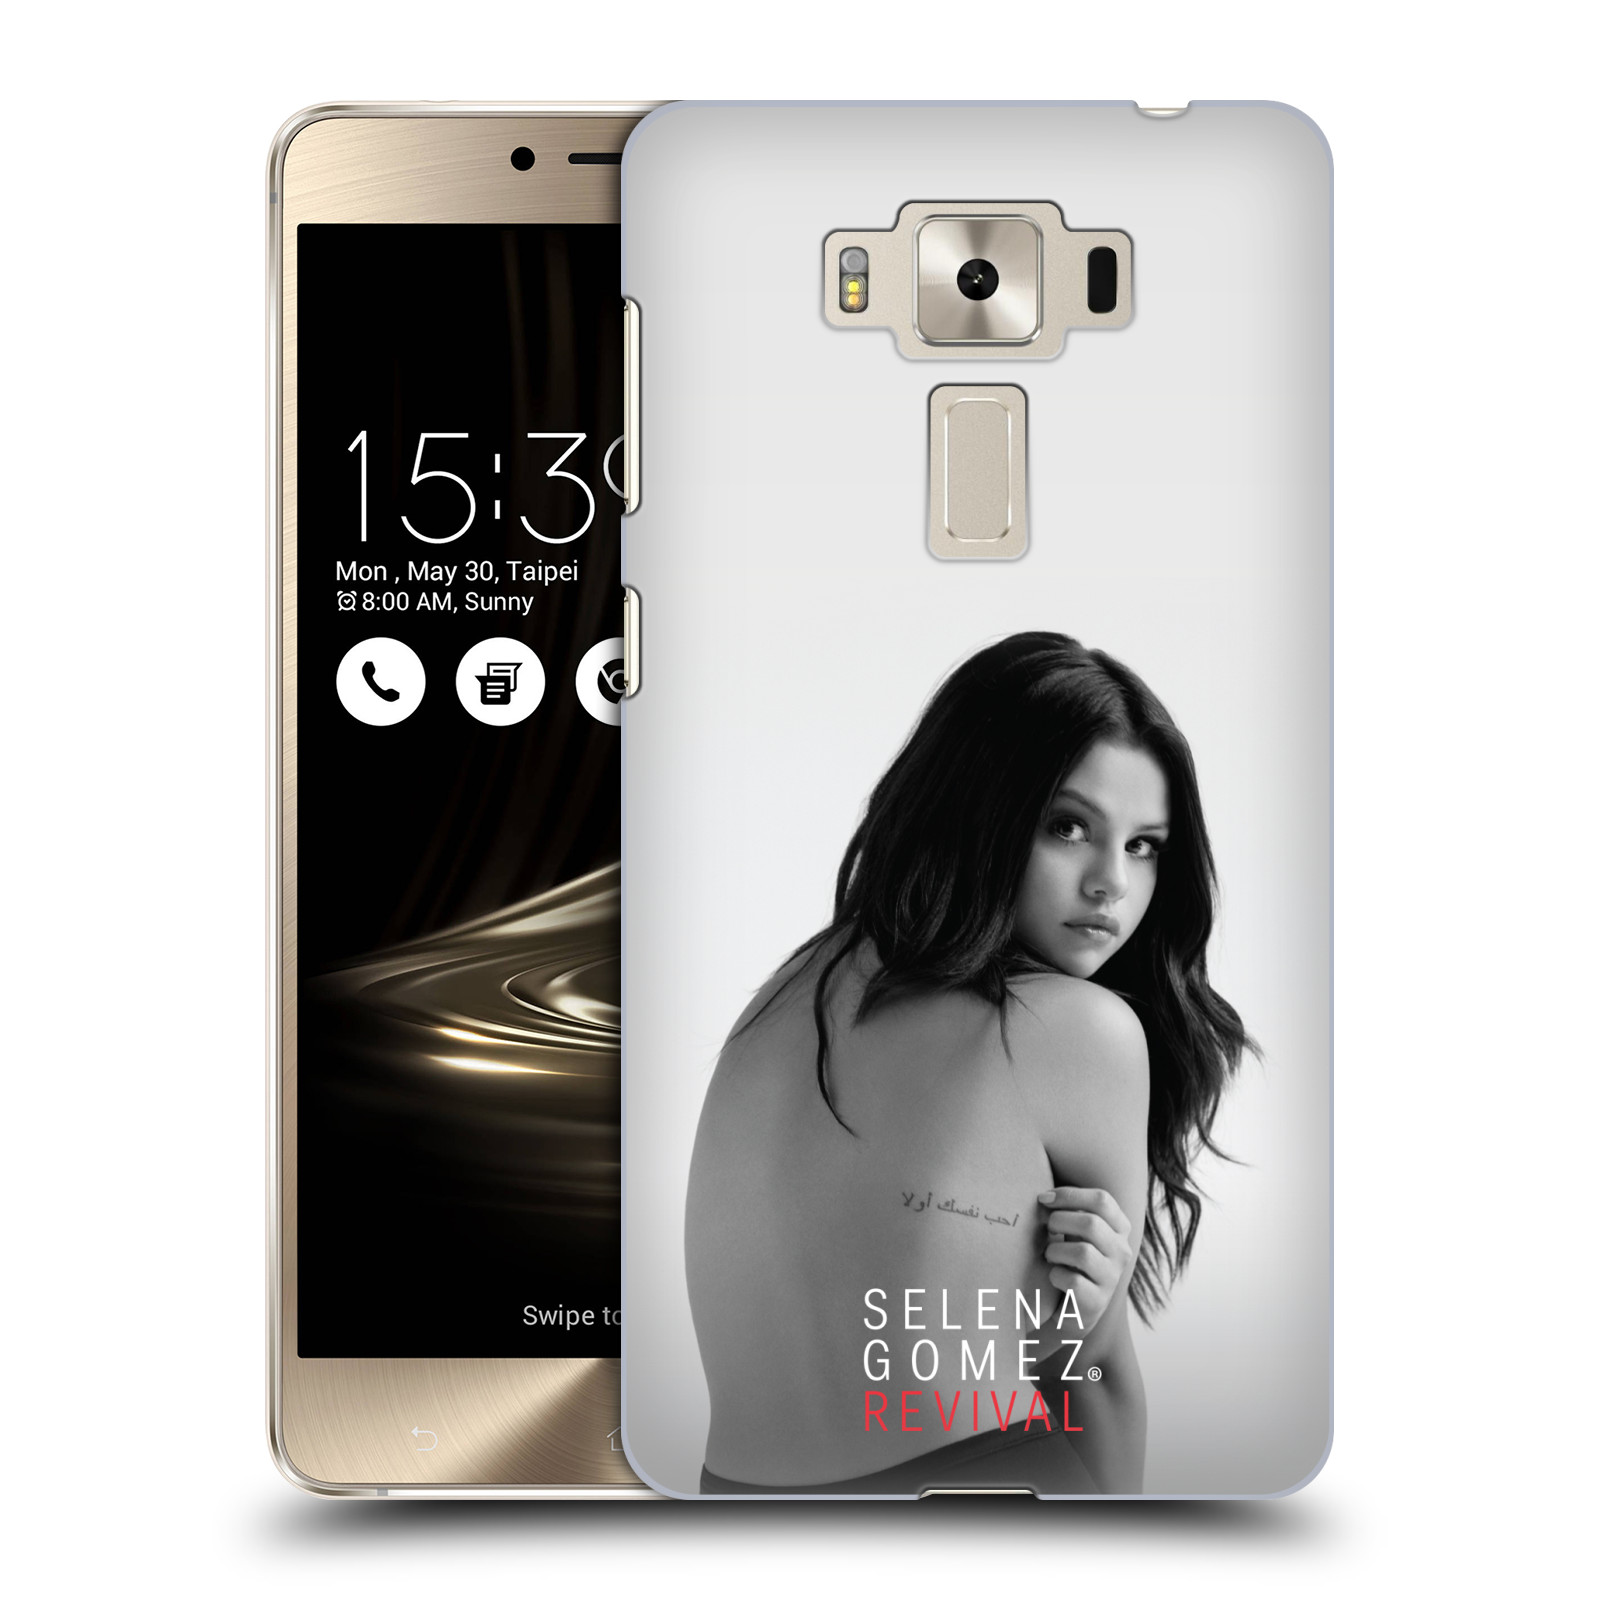 HEAD CASE plastový obal na mobil Asus Zenfone 3 DELUXE ZS550KL Zpěvačka Selena Gomez foto Revival zadní strana